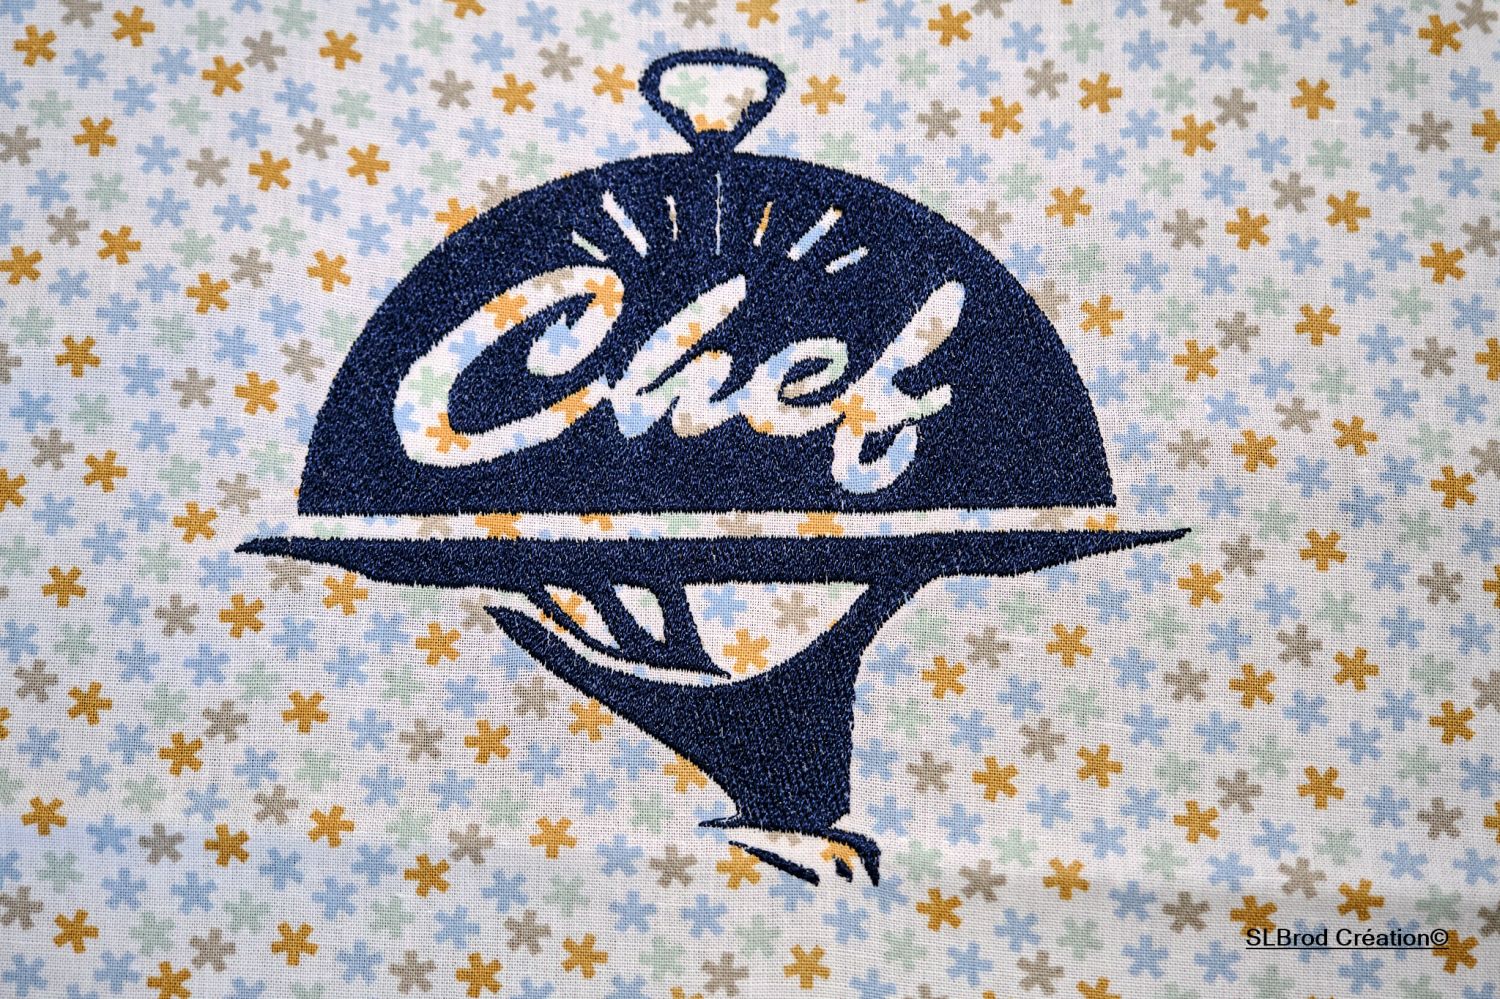 Embroidered children's apron